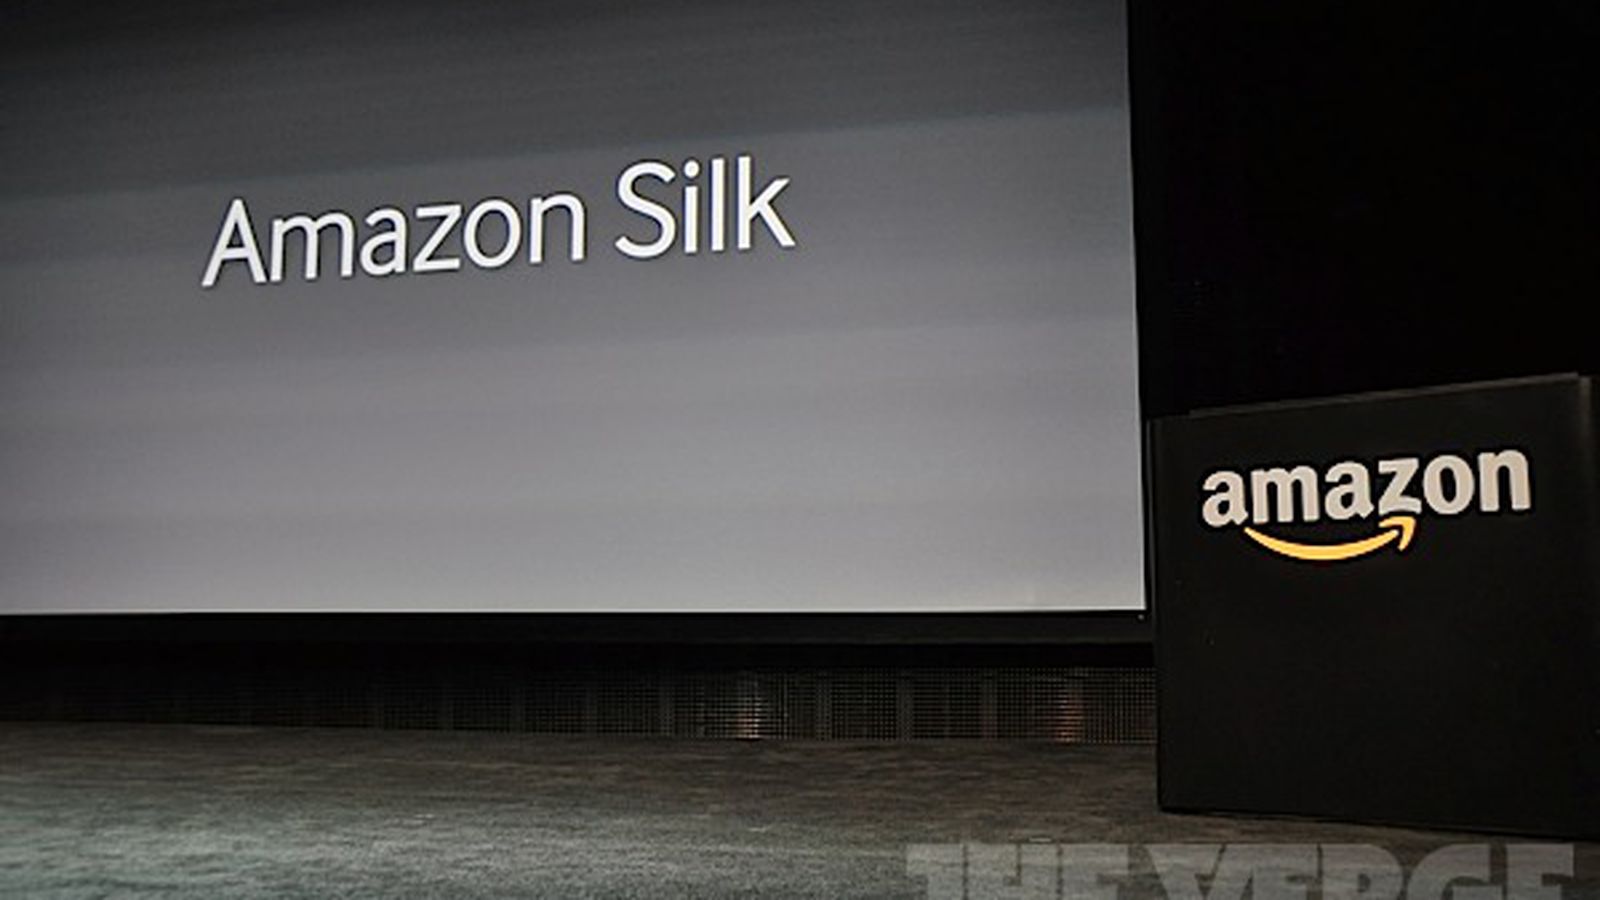 Amazon Silk